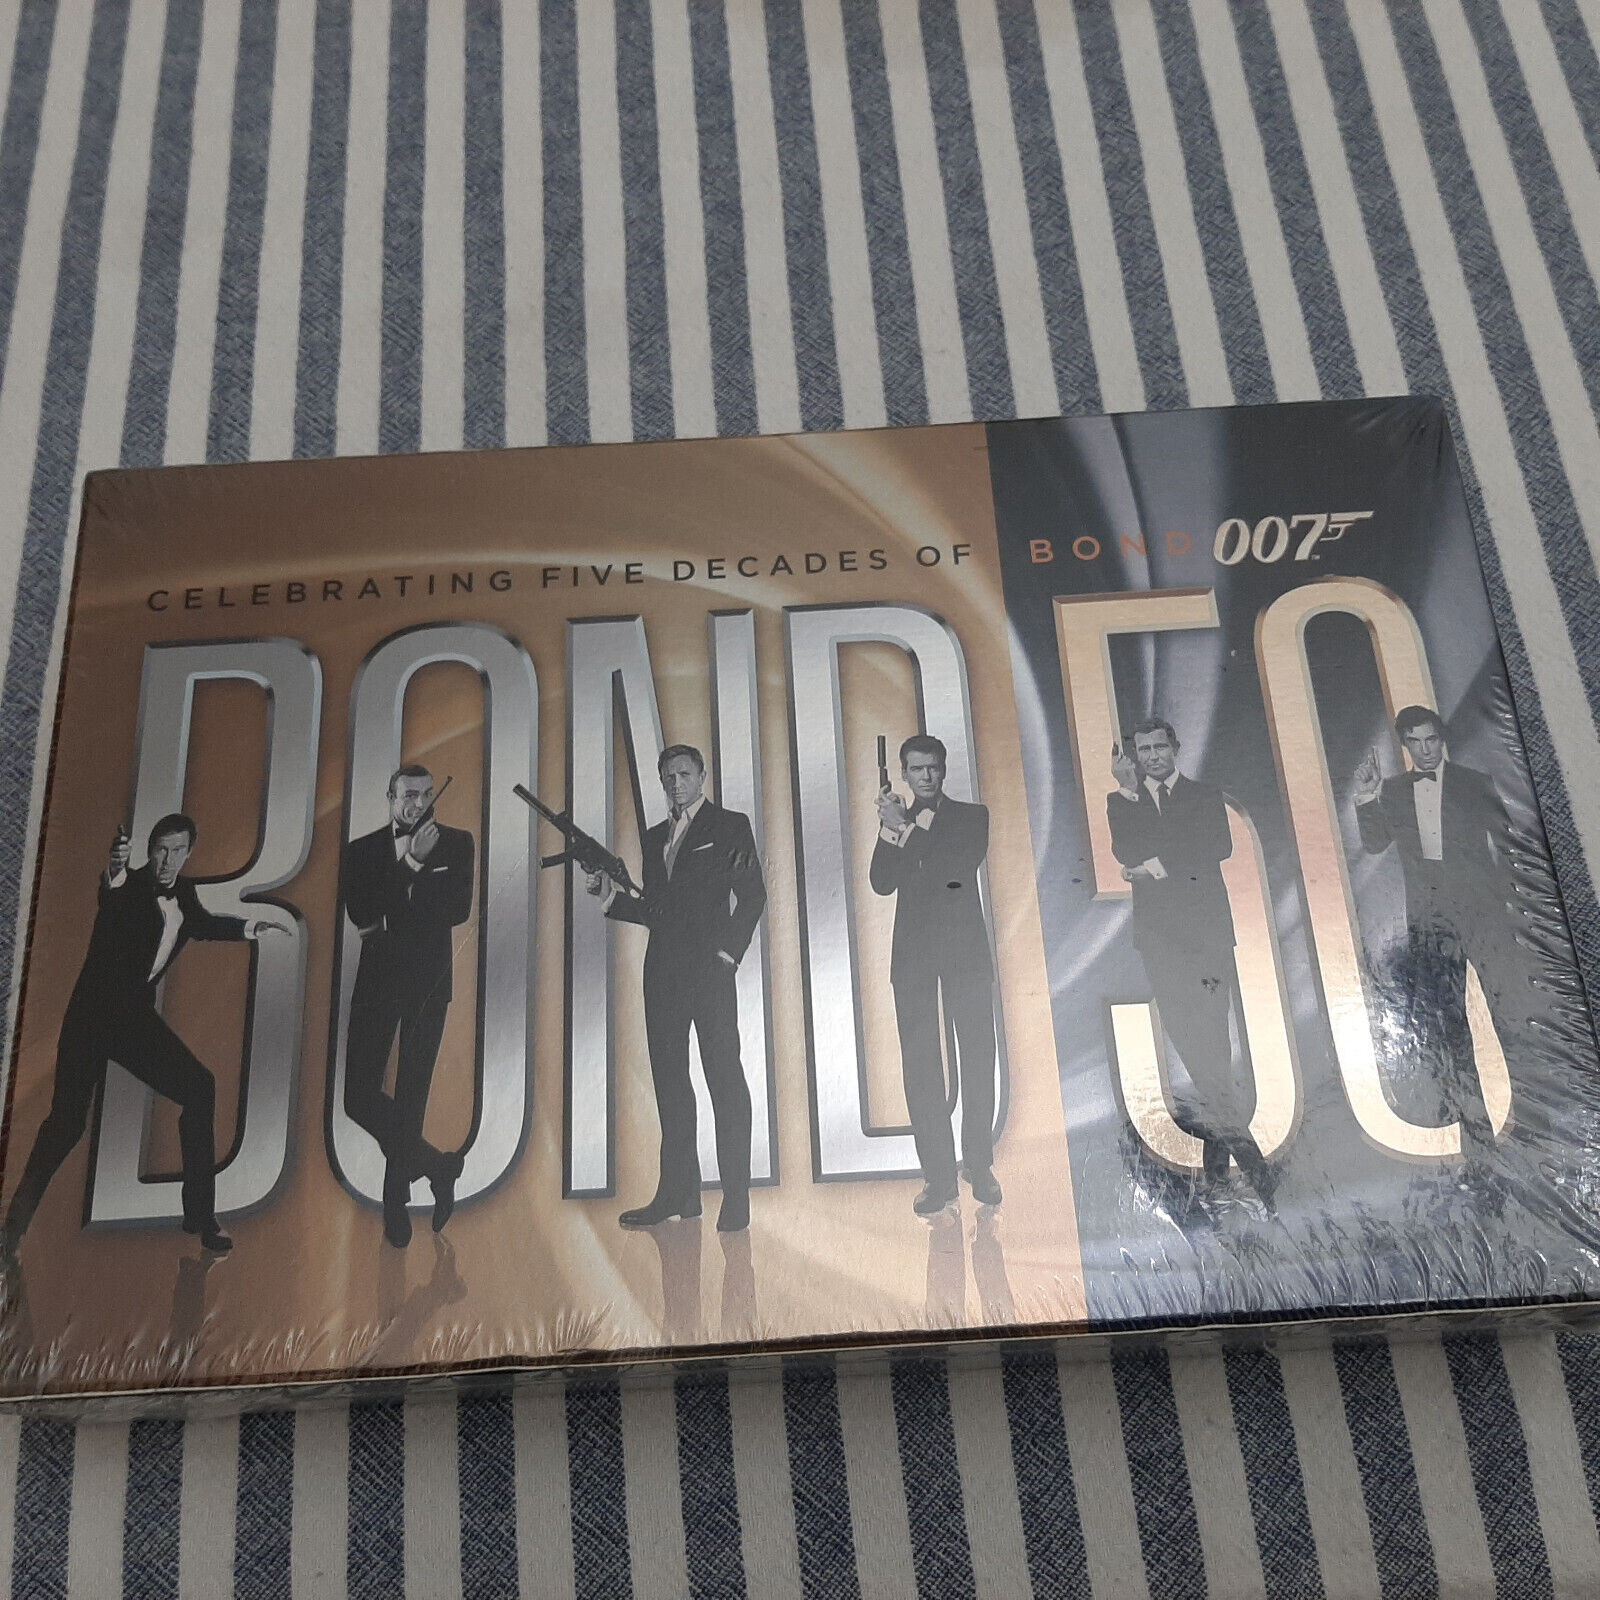 Bond 50: Celebrating Five Decades of Bond 007 (DVD, 2012, 23-Disc Set)-BRAND NEW